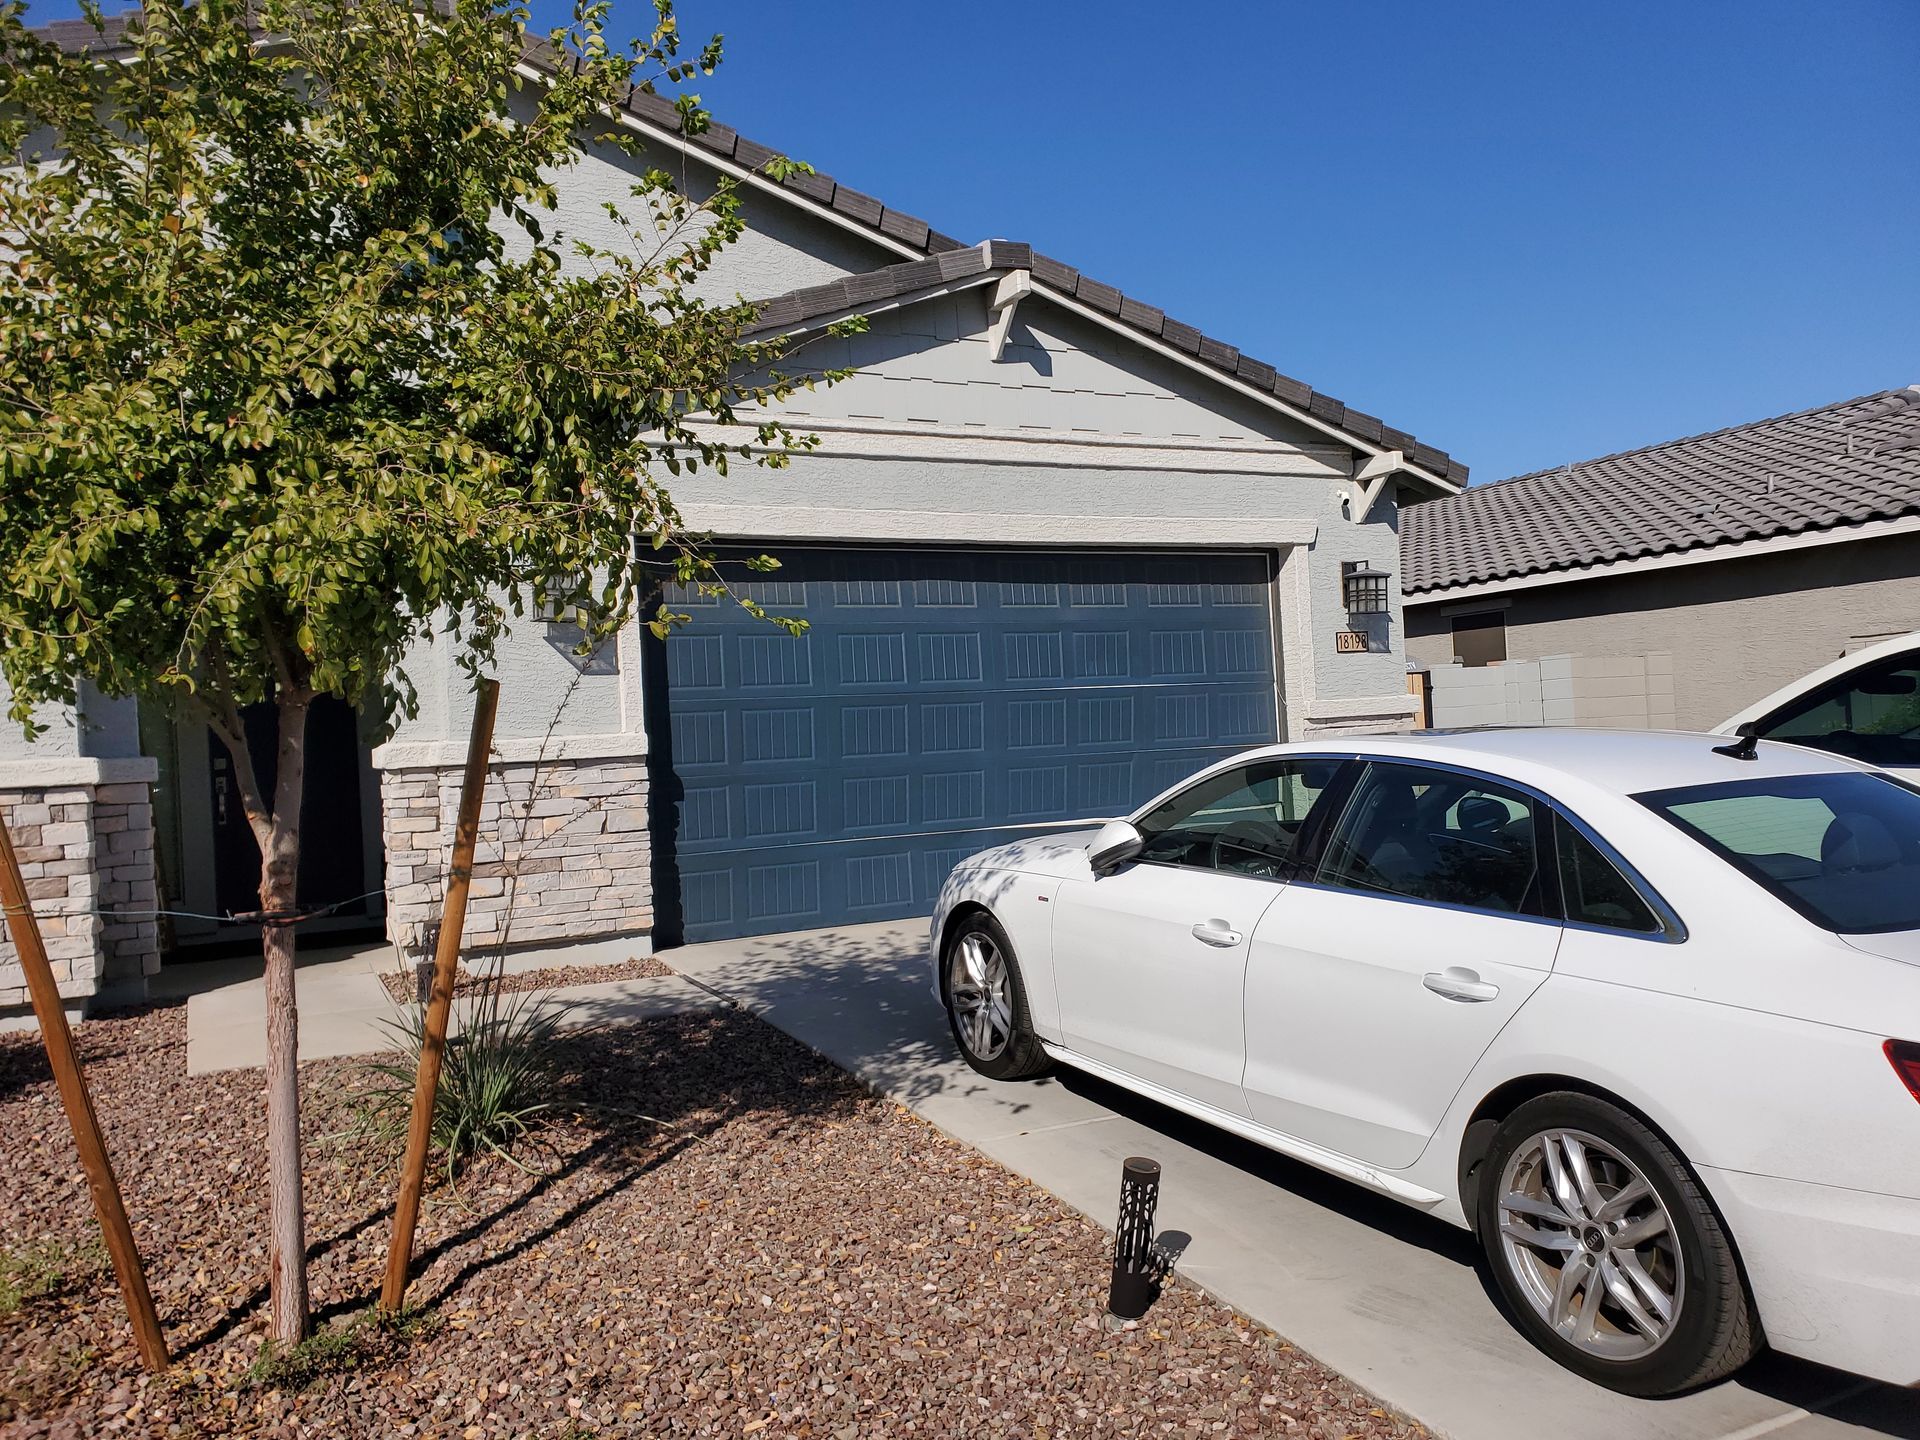 Expert performing garage door repair in Avondale, AZ on a residential property.